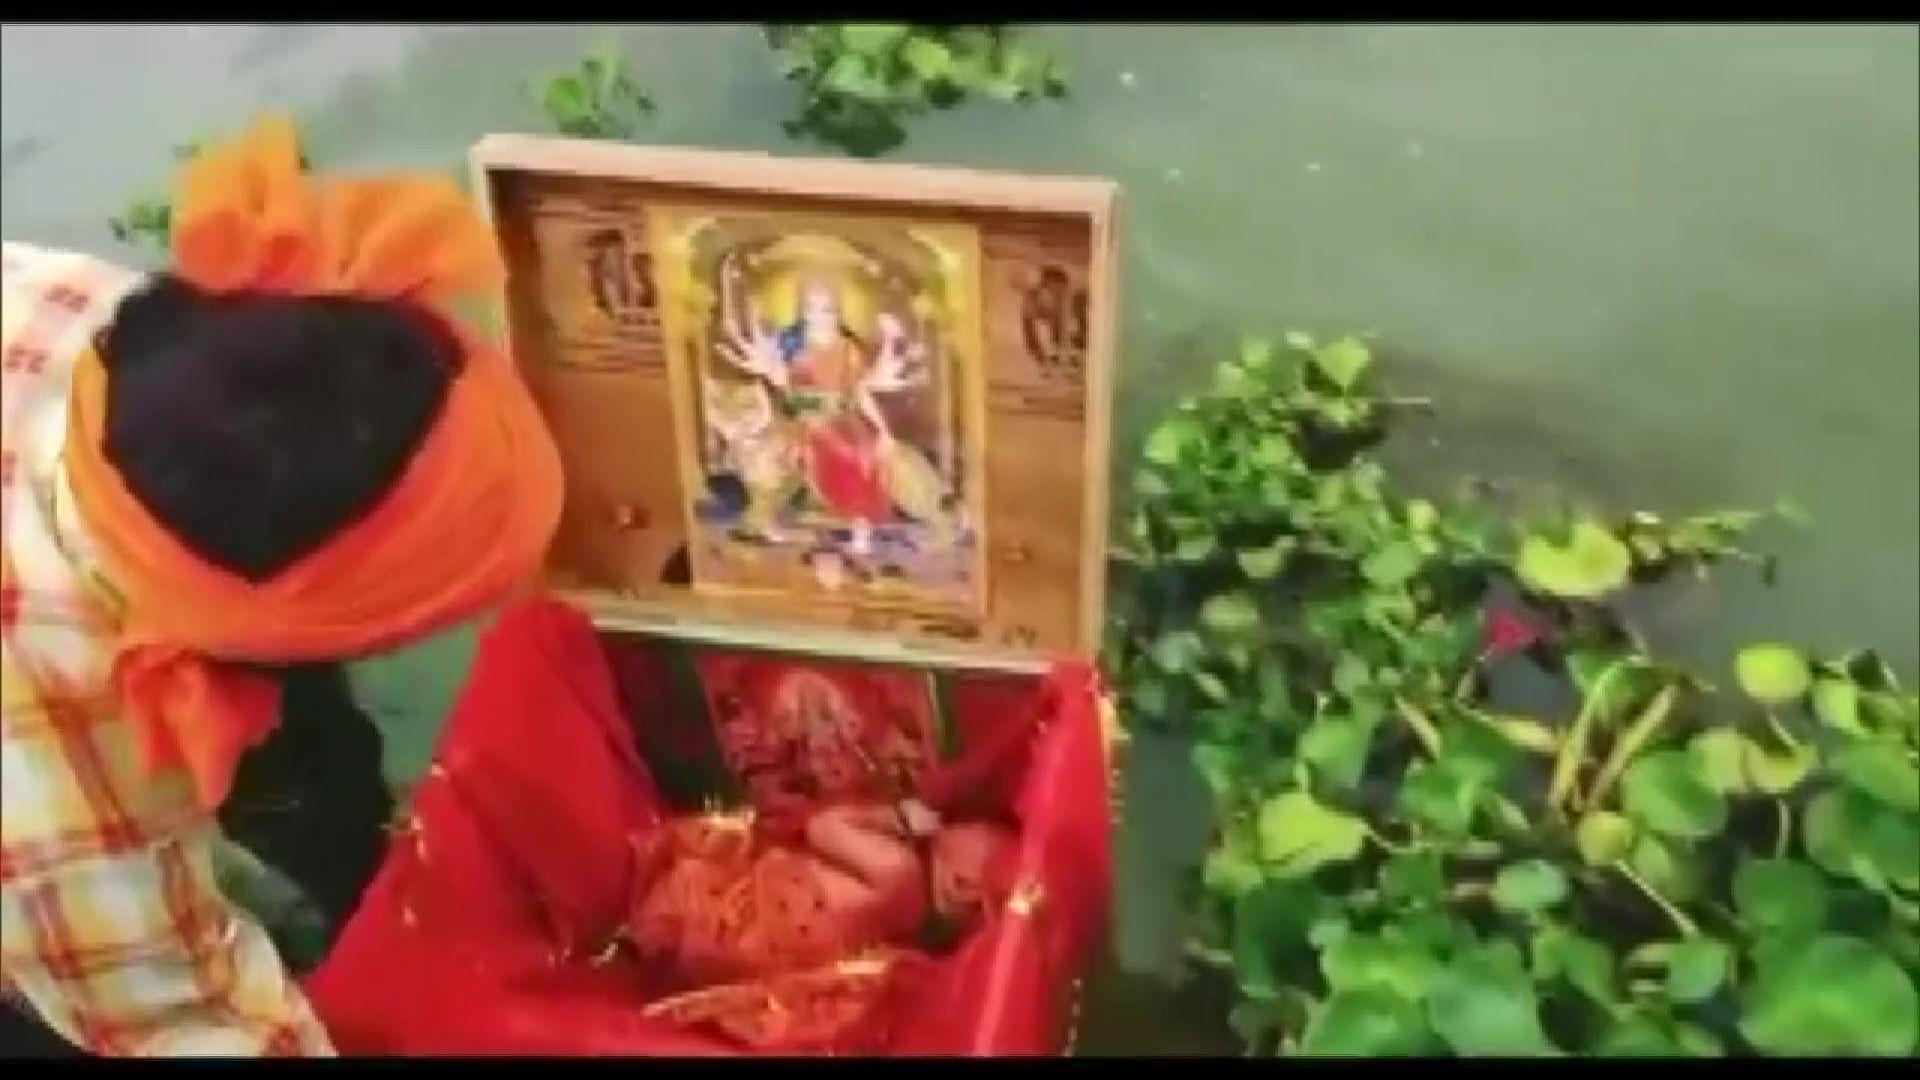 1-month-old ‘Ganga’ found floating in a box in Ganga